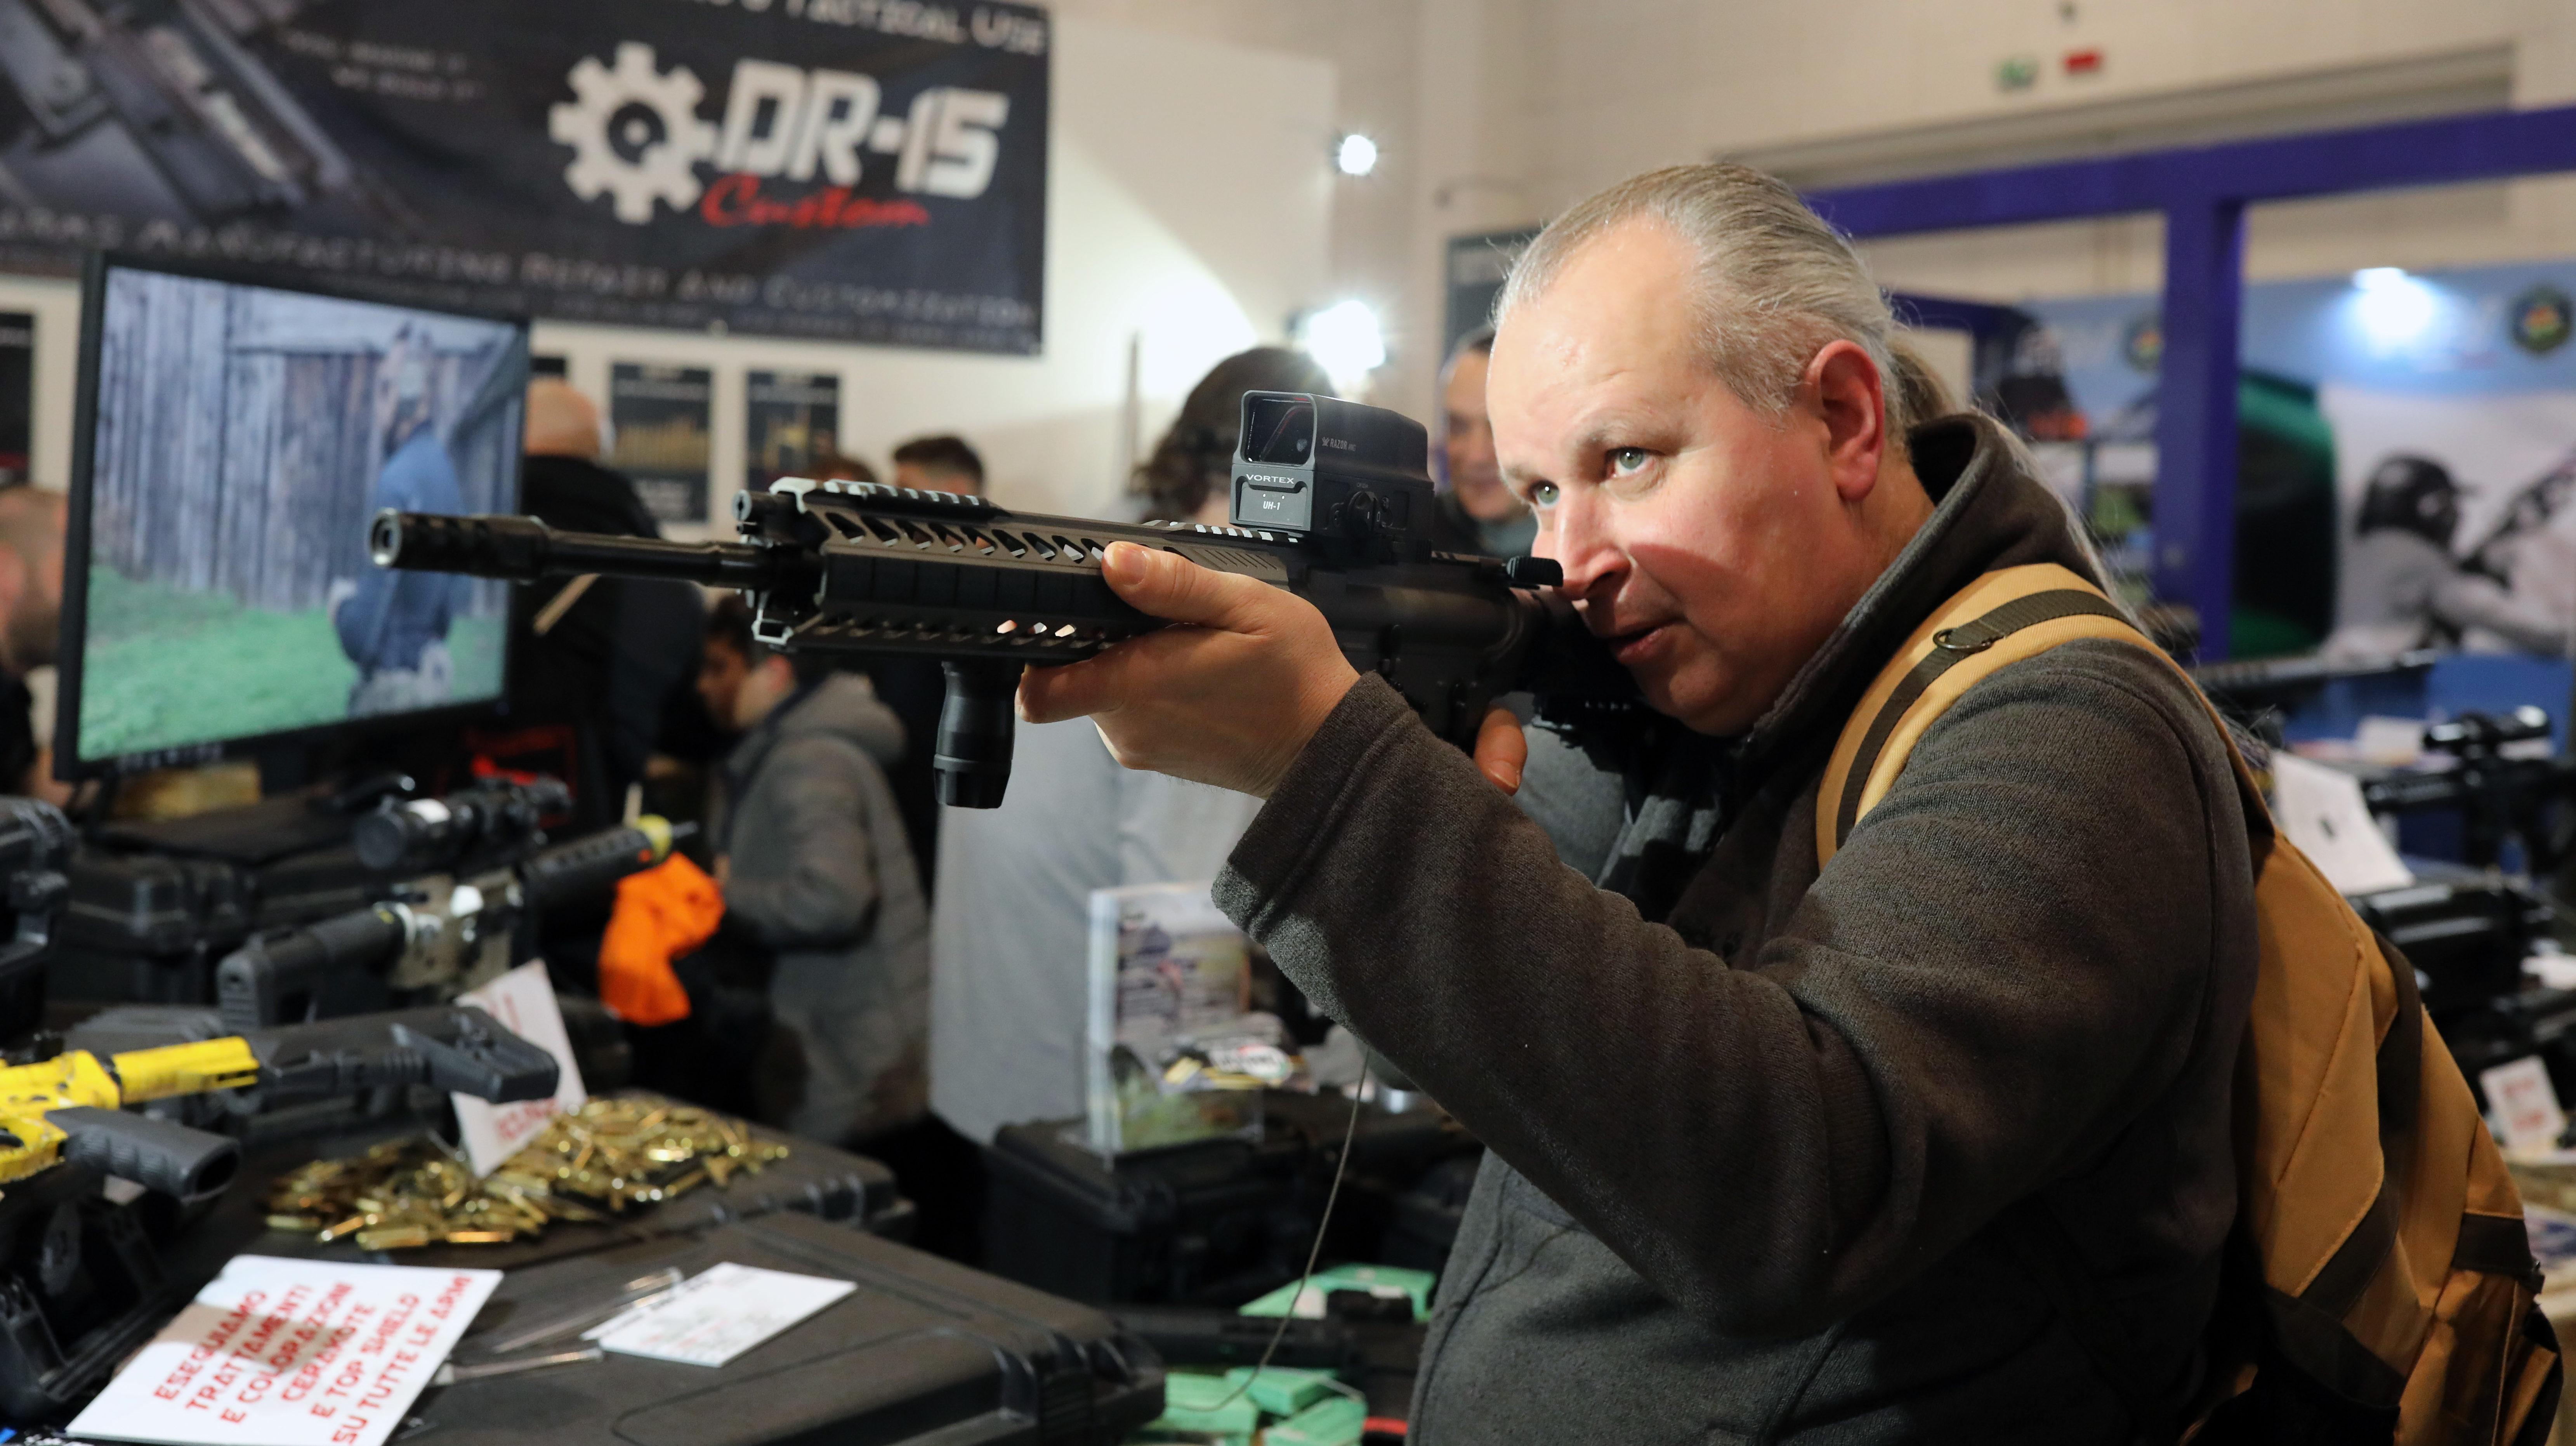 Jordan Pushes Bill to Limit Firearm Ownership